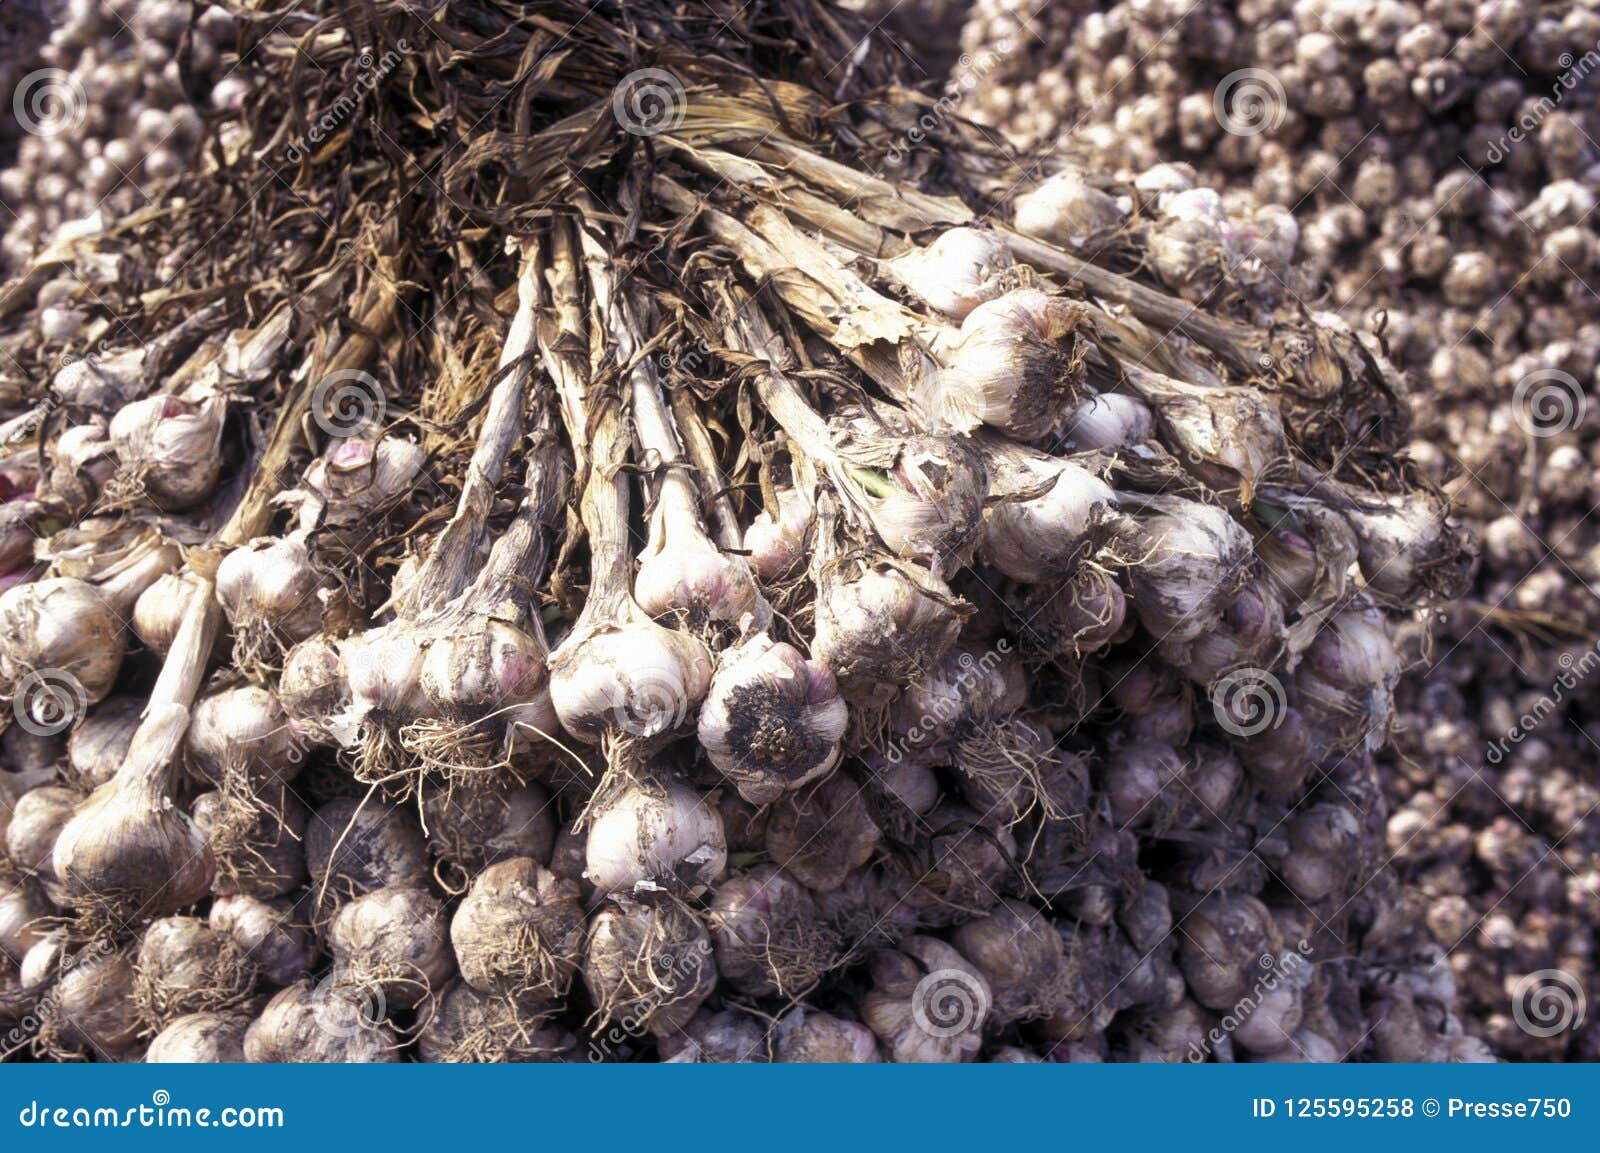 southkorea seoul market garlic